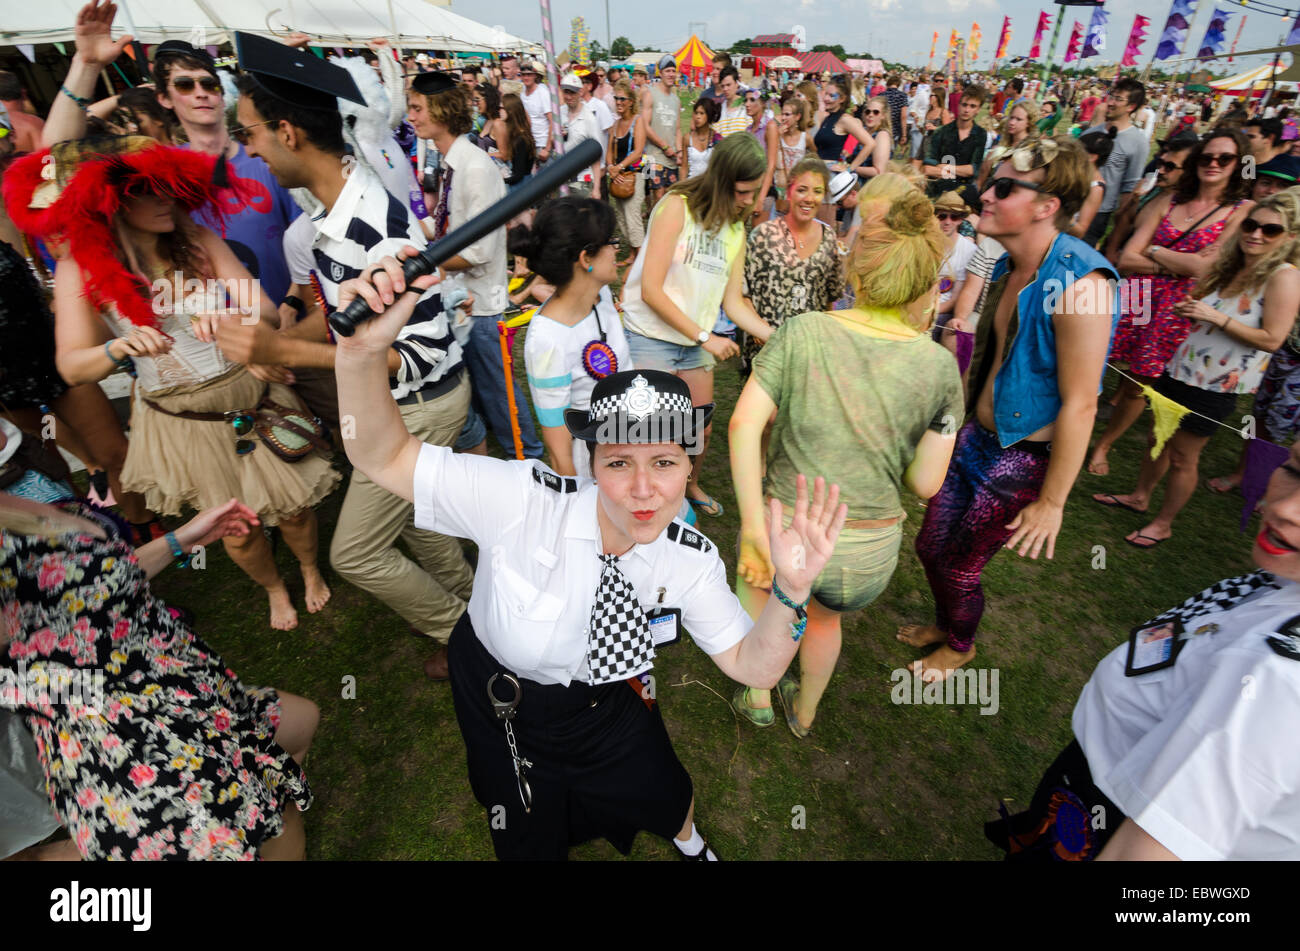 Woman's police costume at Secret Garden festival, United Kingdom Stock Photo